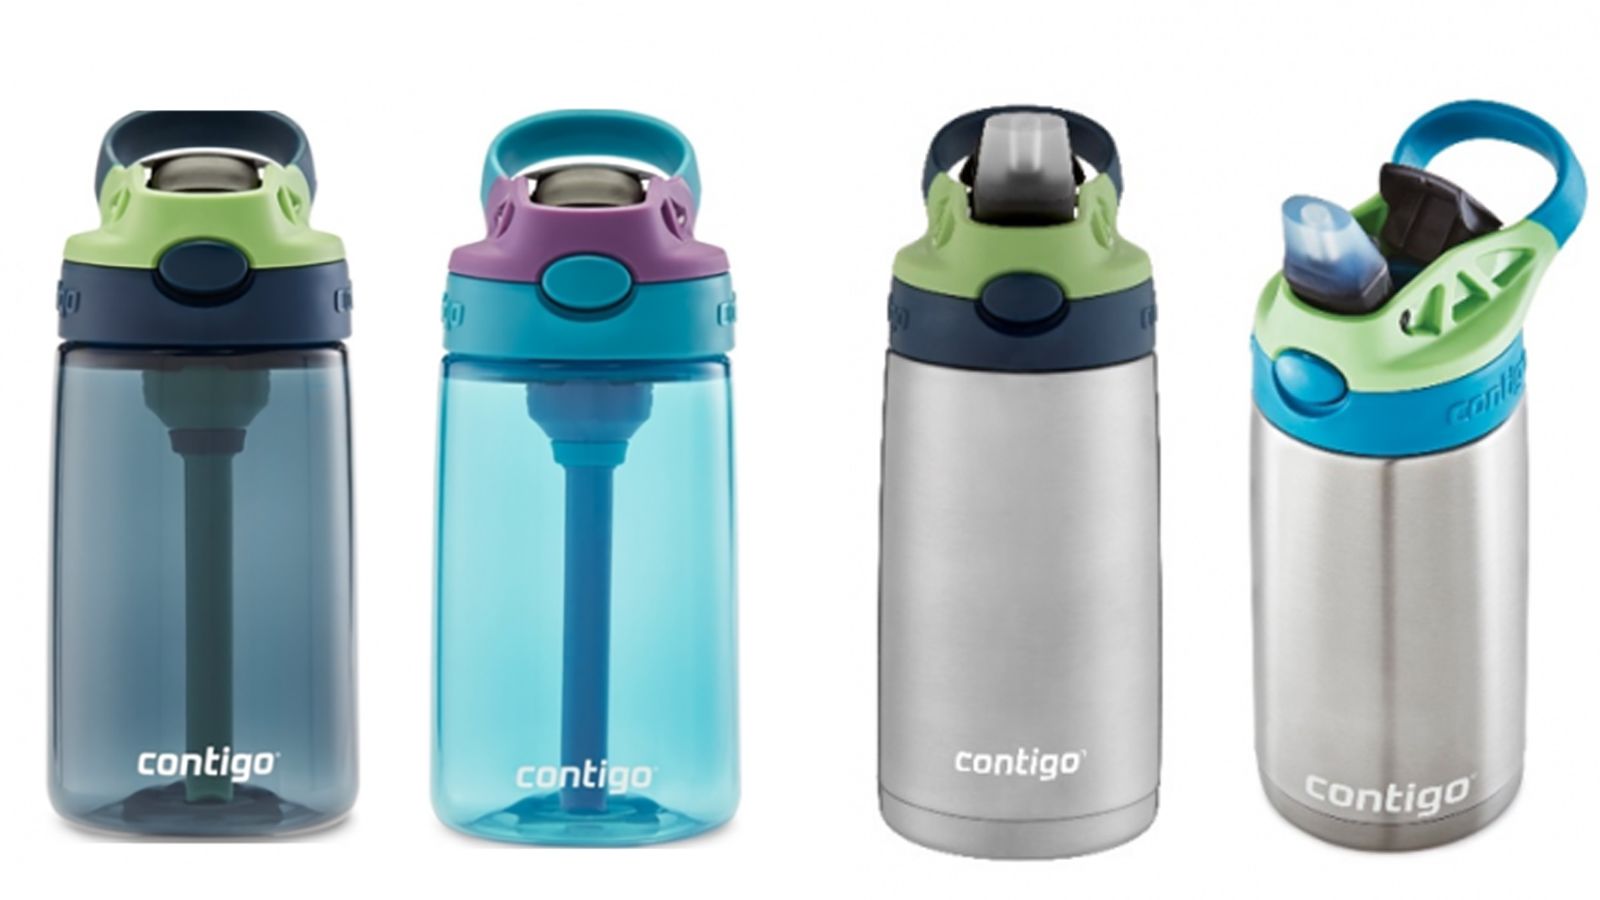 Contigo Kids Cleanable Water Bottles recalled due to choking